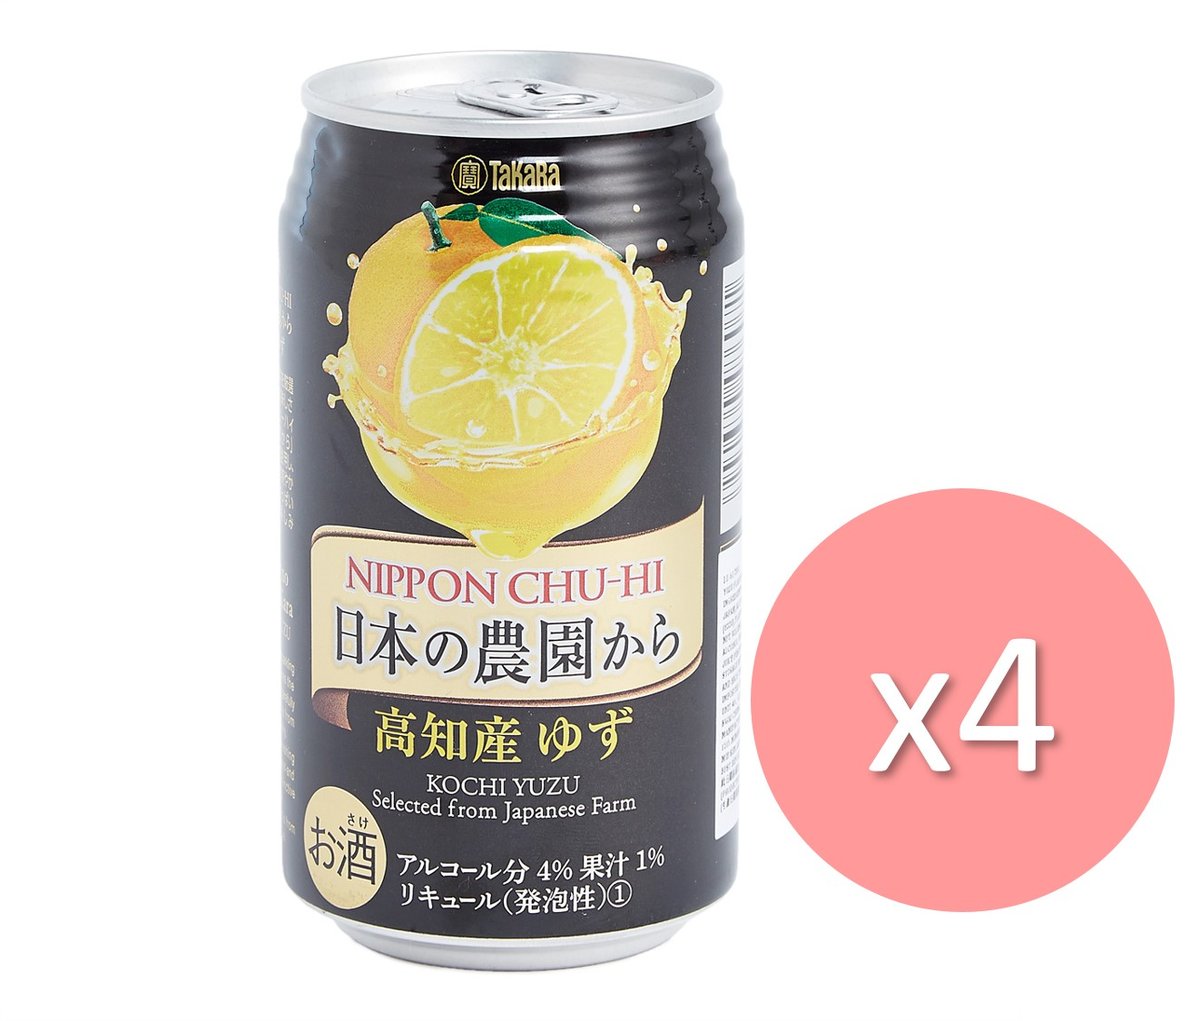 Takara | 日本農園高知產柚子汁汽酒x 4 | HKTVmall 香港最大網購平台